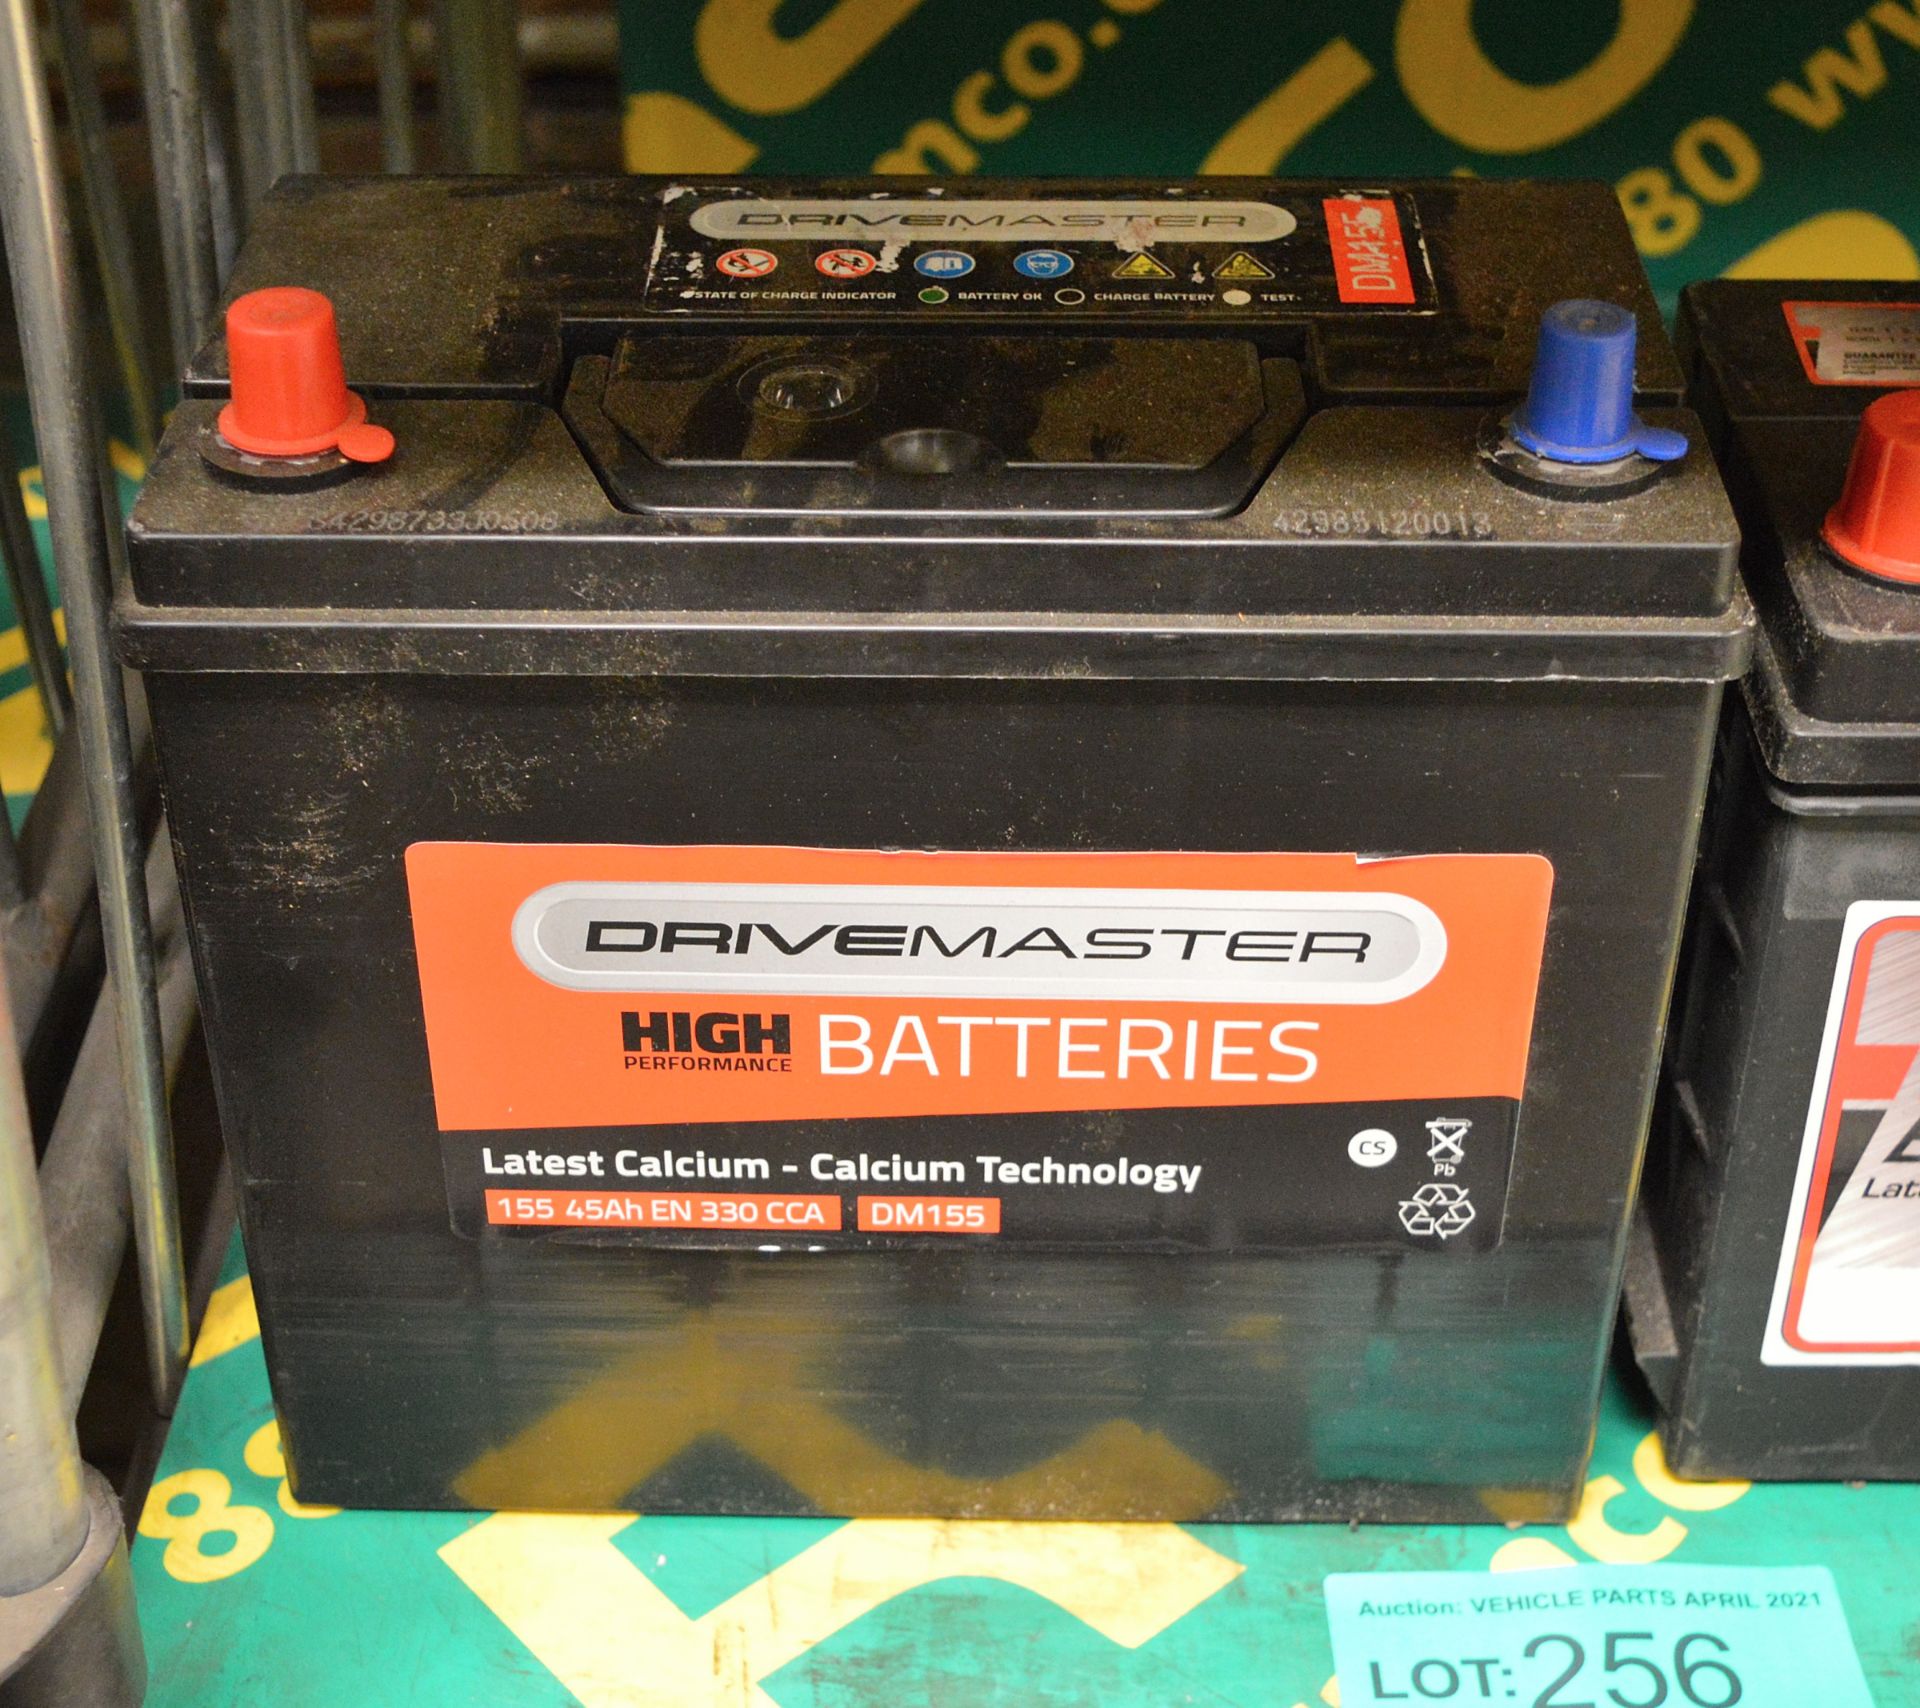 Drivemaster DM155 & Lion 038 45Ah EN 330 CCA Batteries - Image 2 of 3